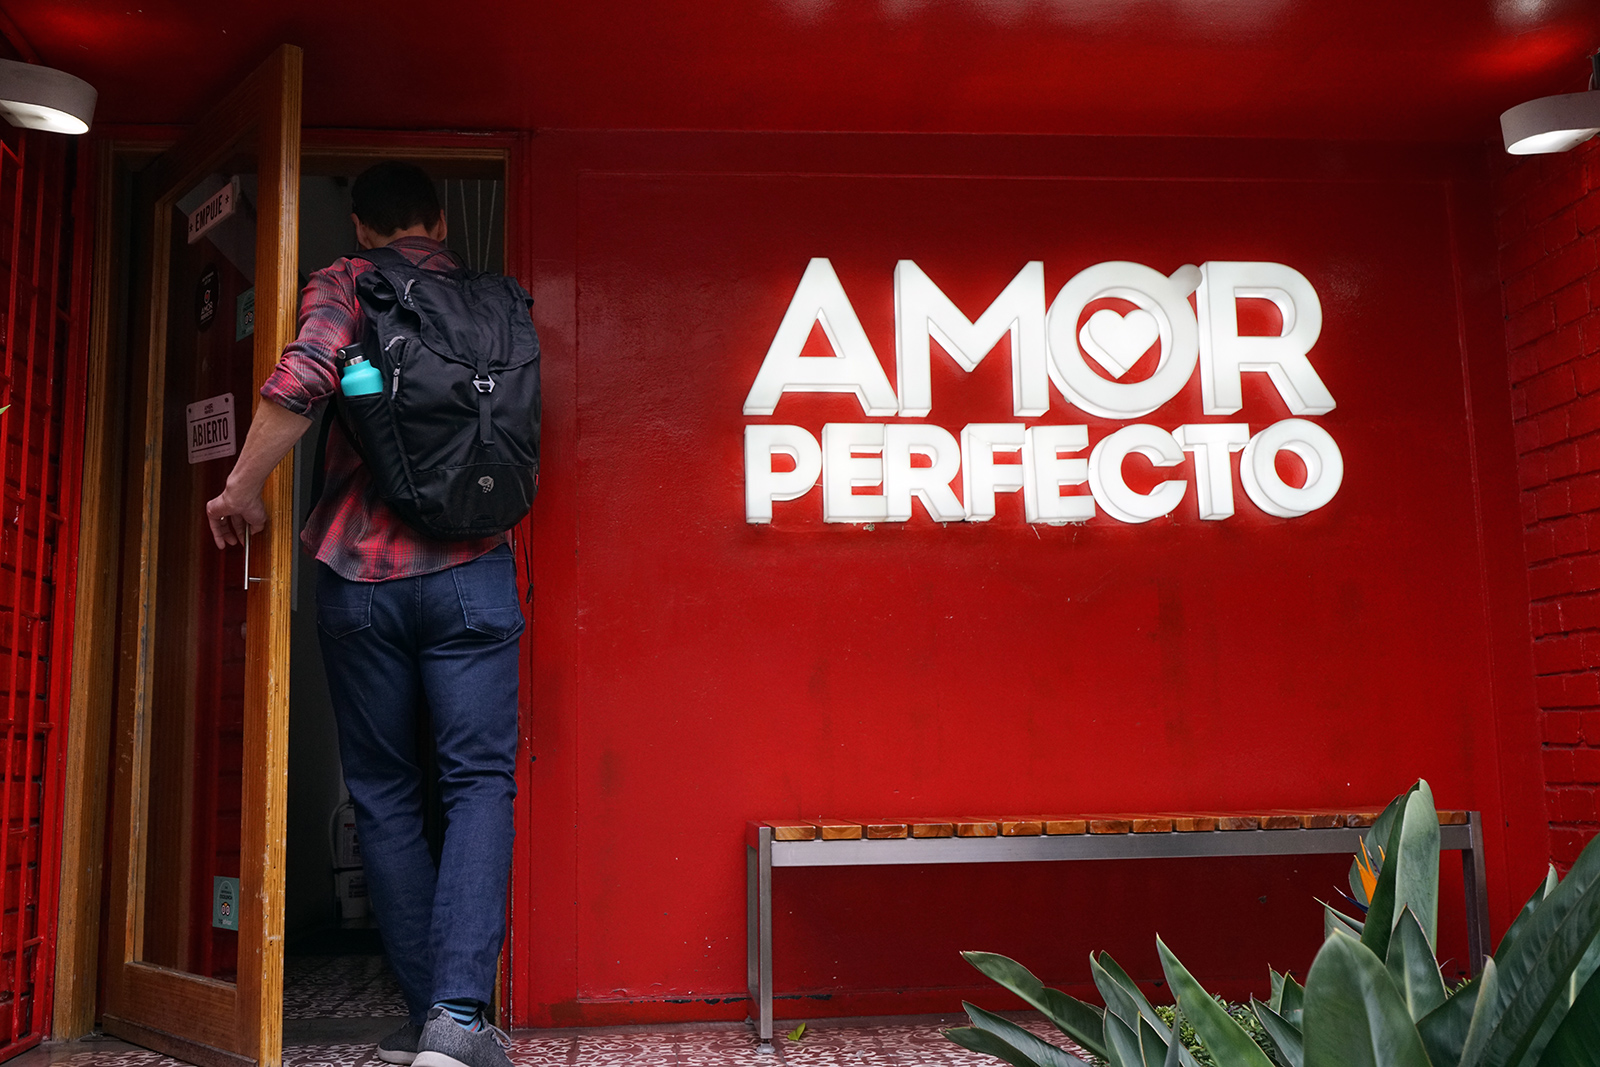 Amor Perfecto Cafe